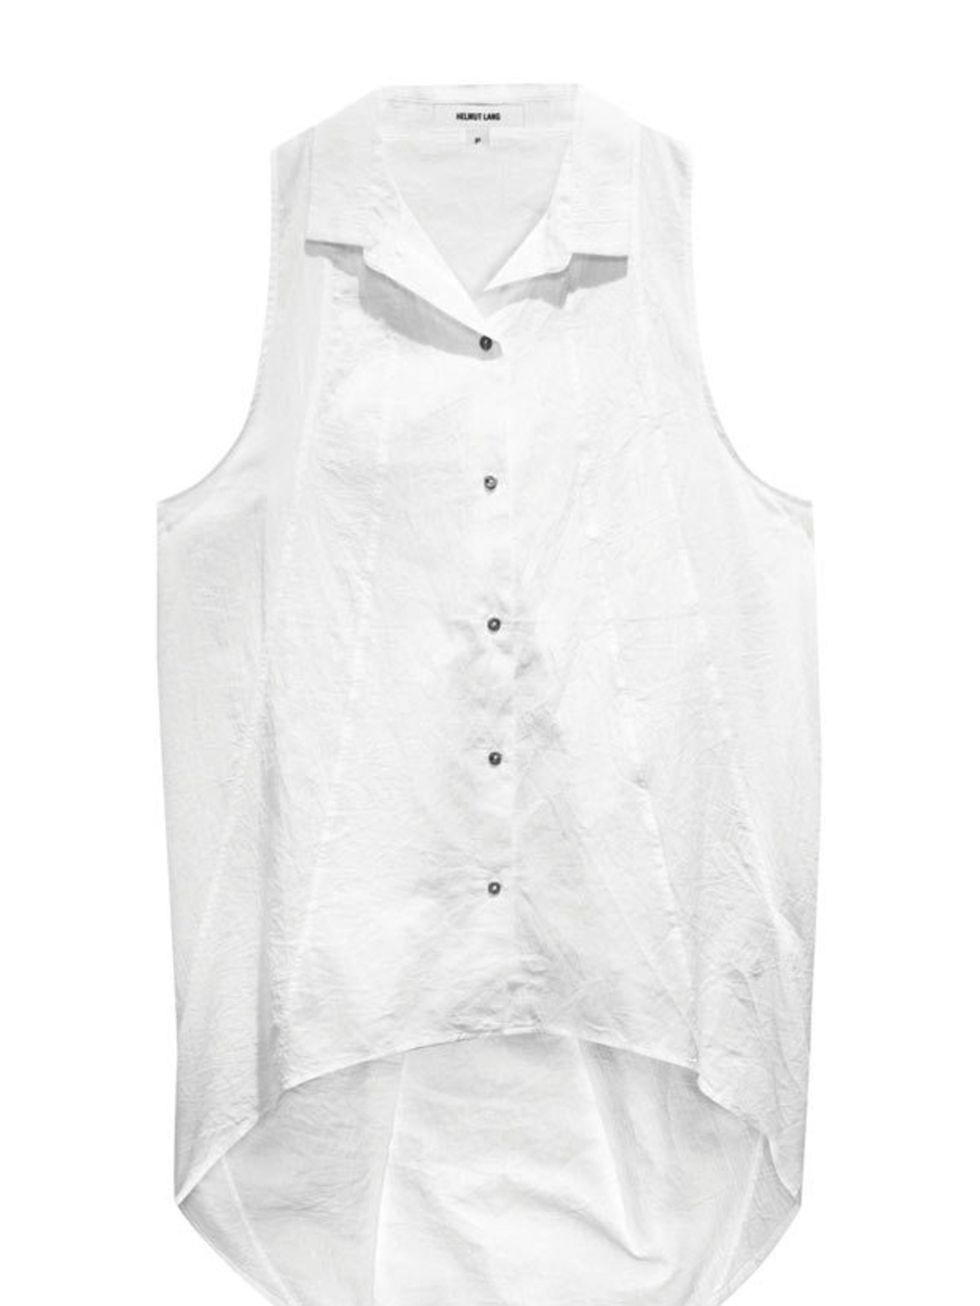 <p>Helmut Lang sleeveless shirt, £150, at <a href="http://www.glassworks-studios.com/product/hel10000/">Glassworks Studios</a></p>